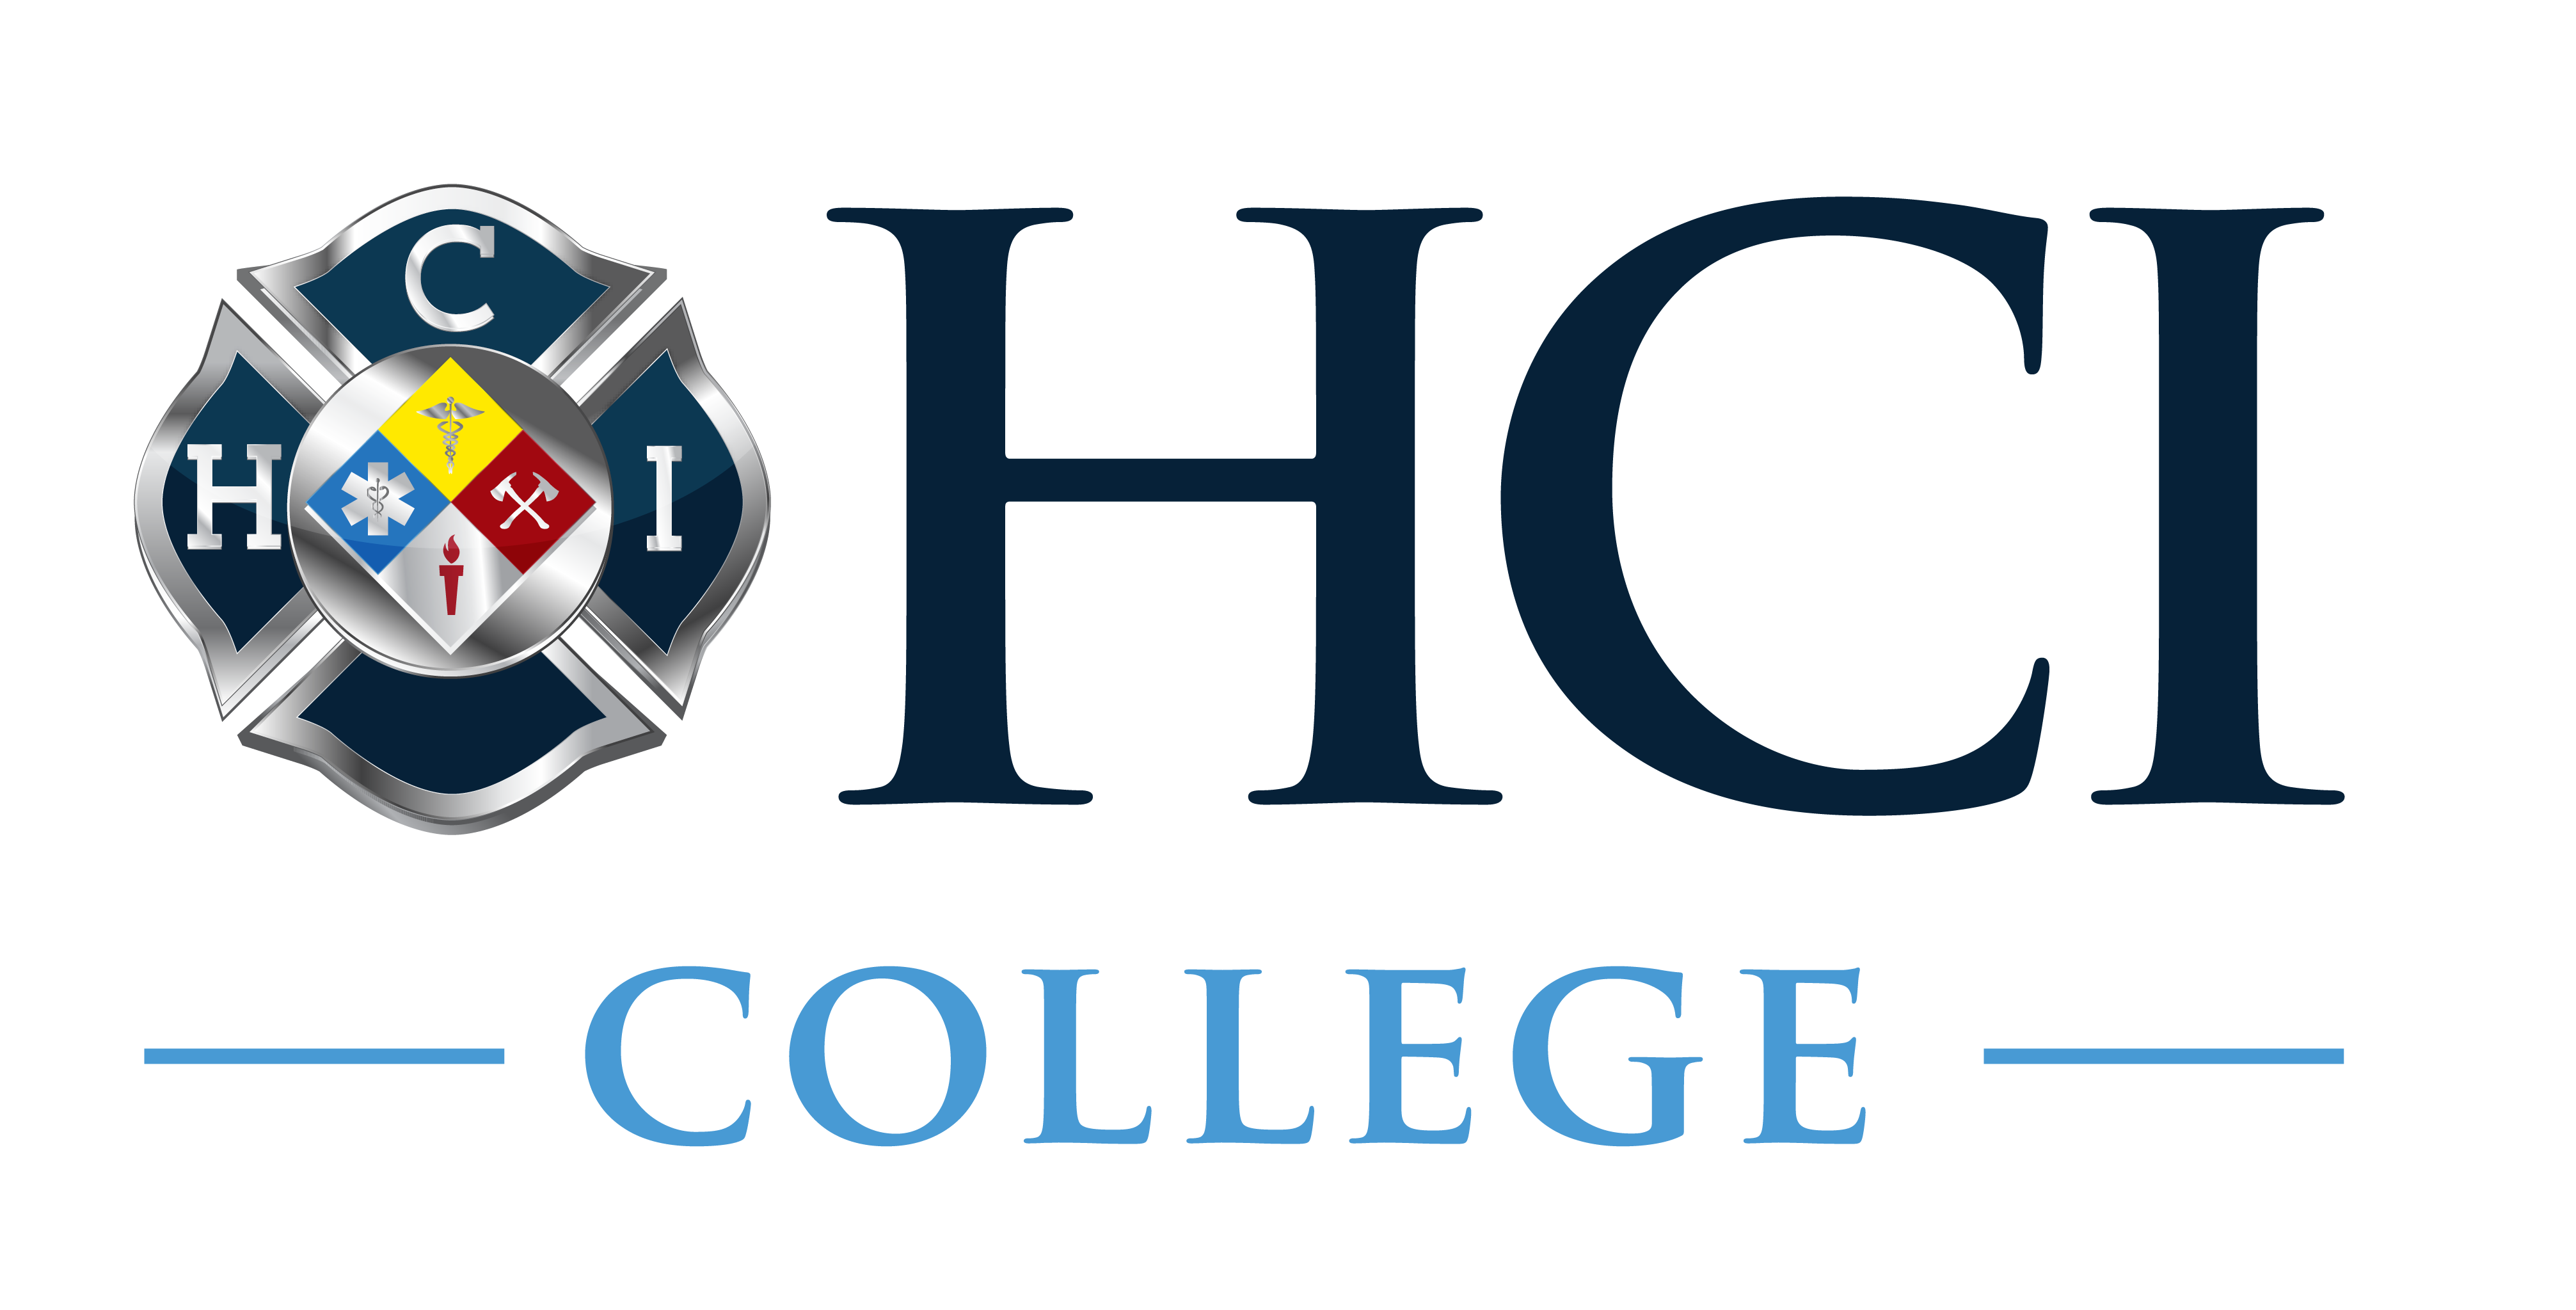 Hci t. HCI. HCI картинка. Gifu College logo. Celt Colleges logo.